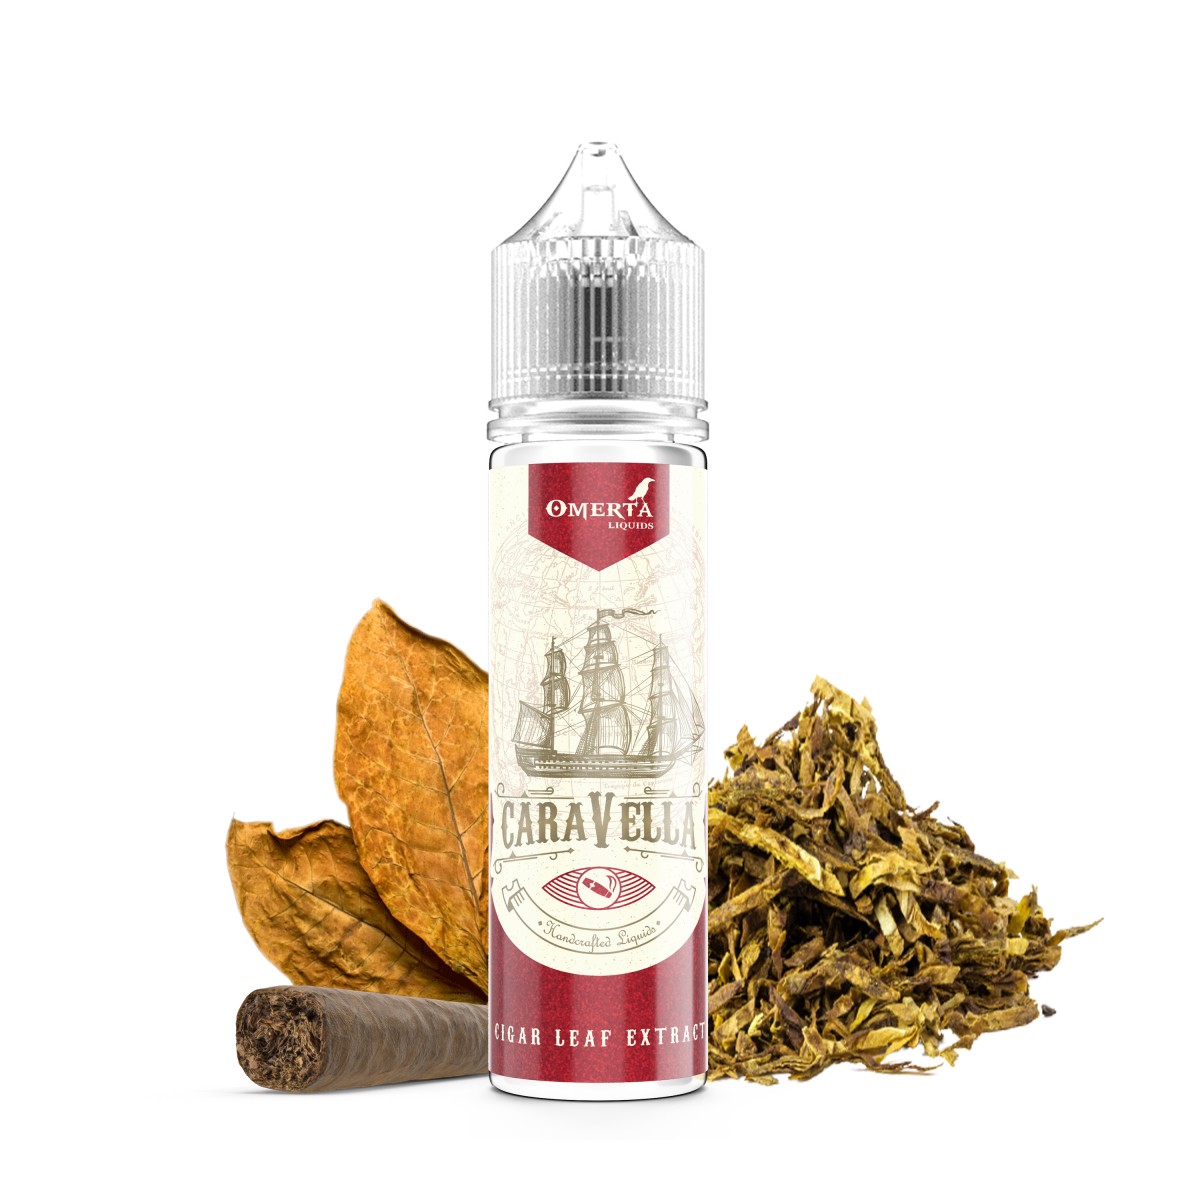 Caravella Cigar Leaf Extract 20ml Flavor WBF-1200×1200